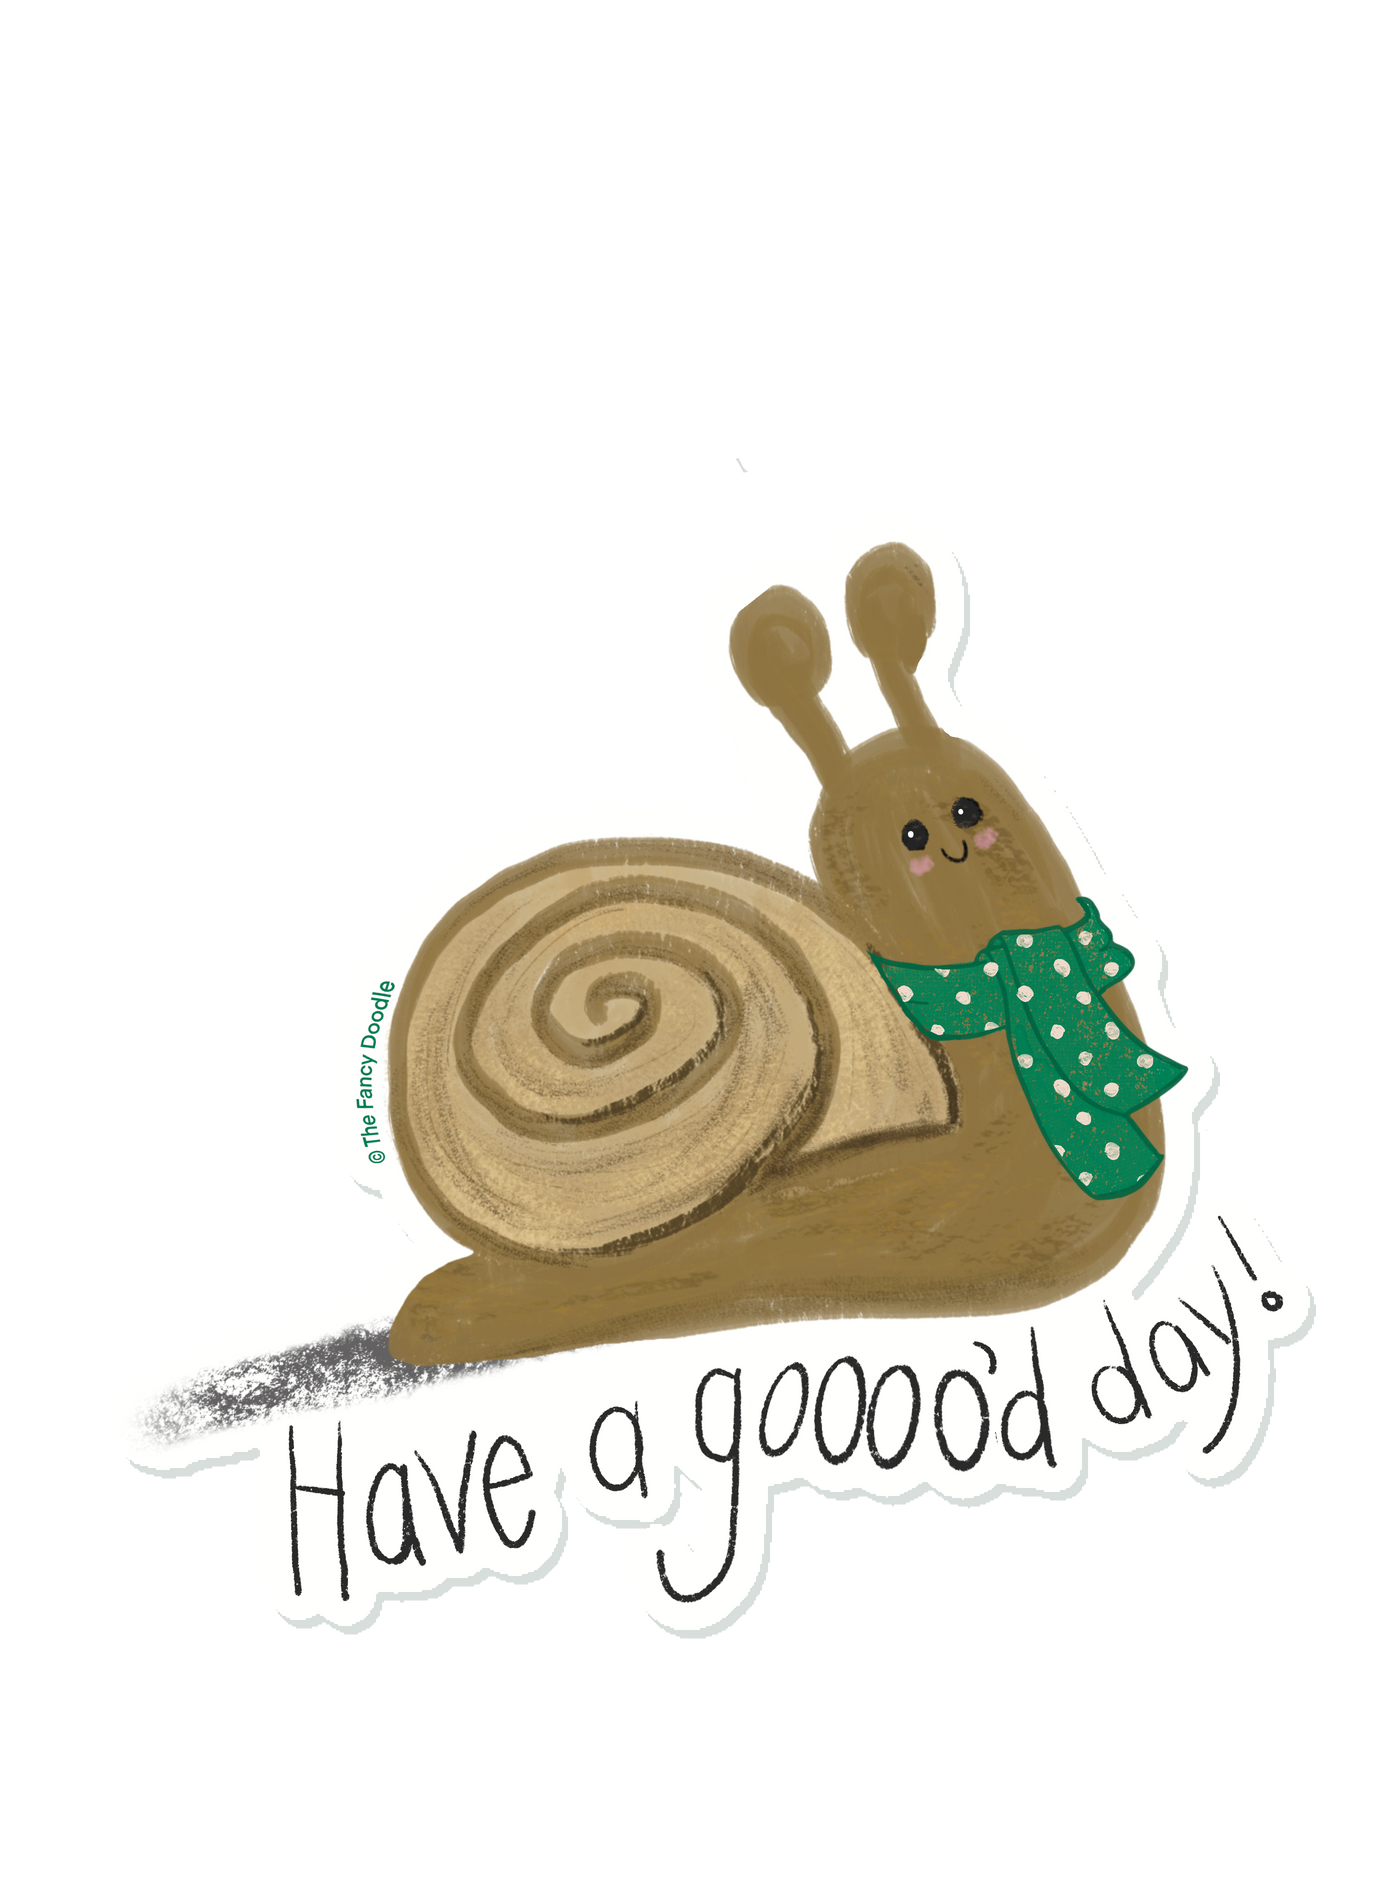 Gooood Day Snail